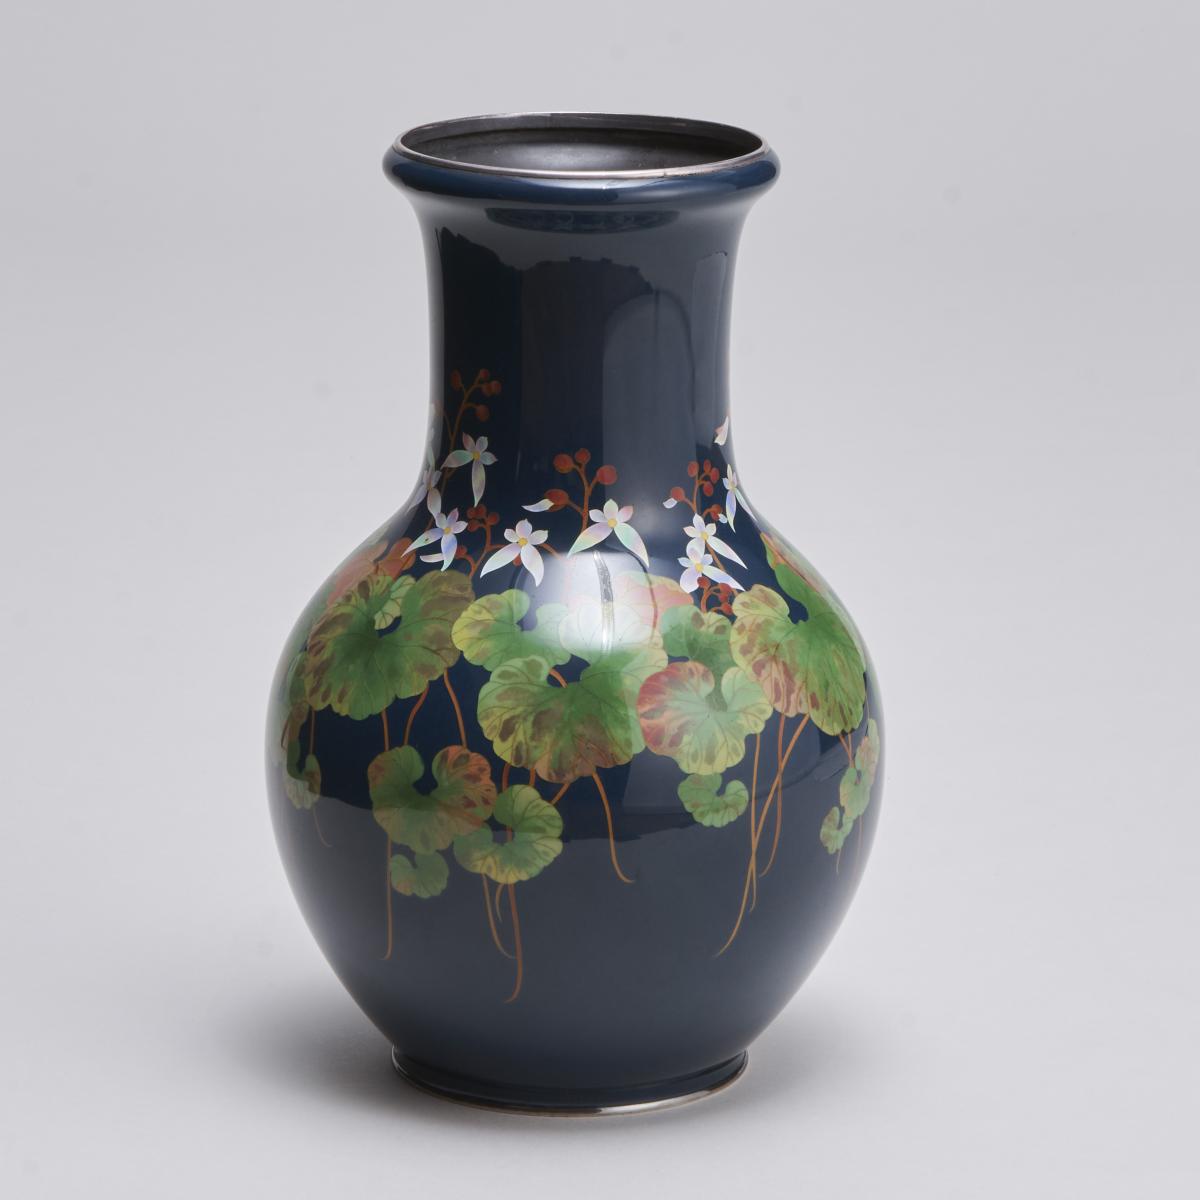 Japanese Cloisonne enamel vase by Ando (Circa 1880)